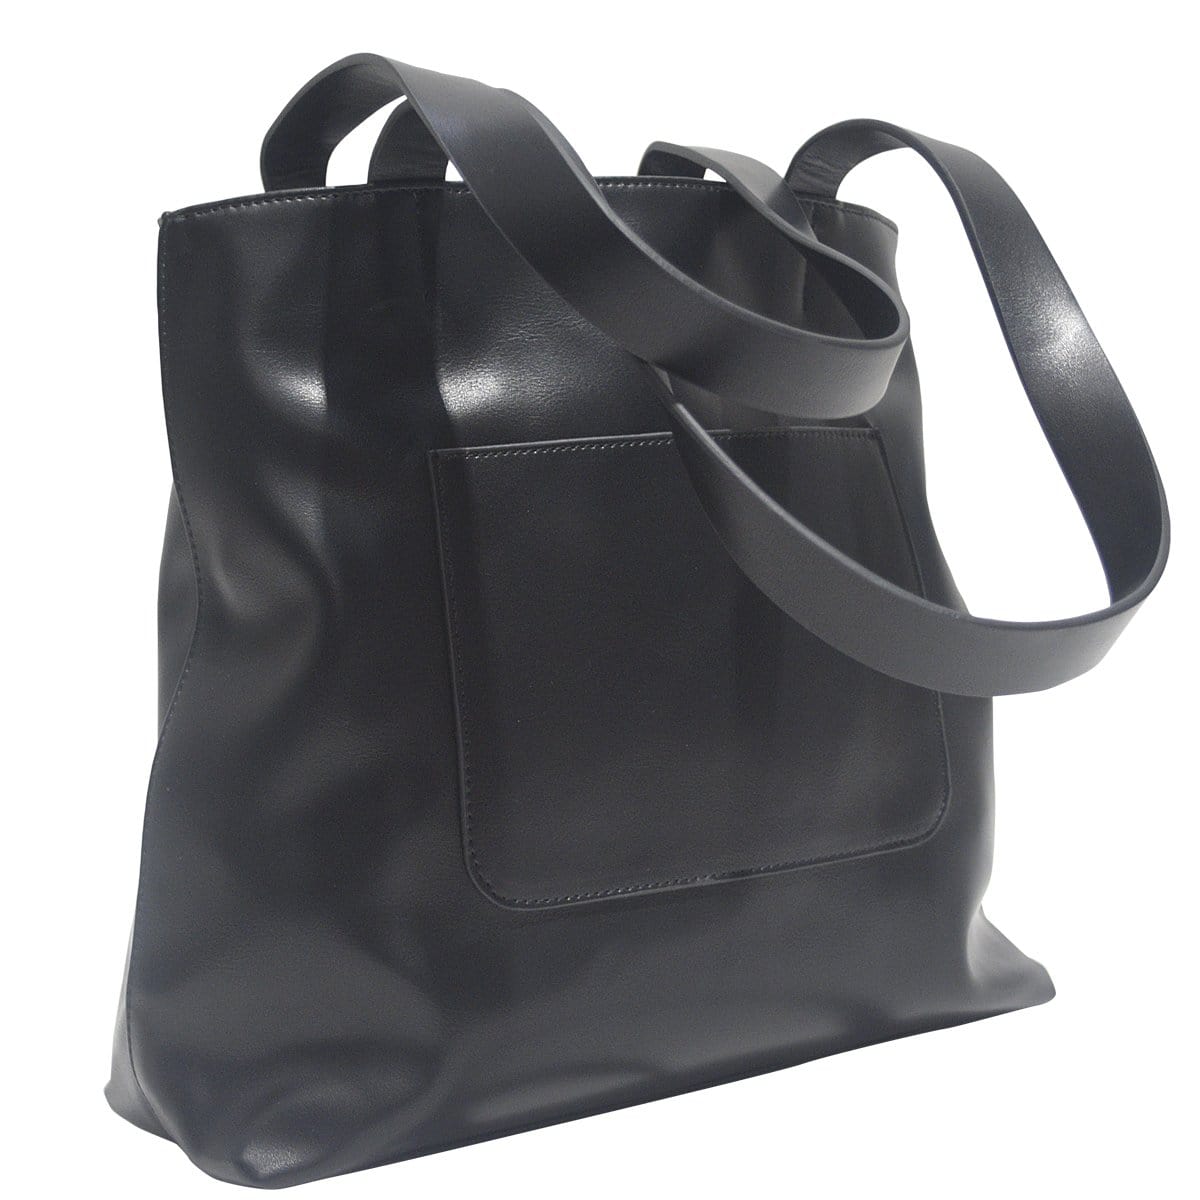 Pocket Tote - Black Leather Look